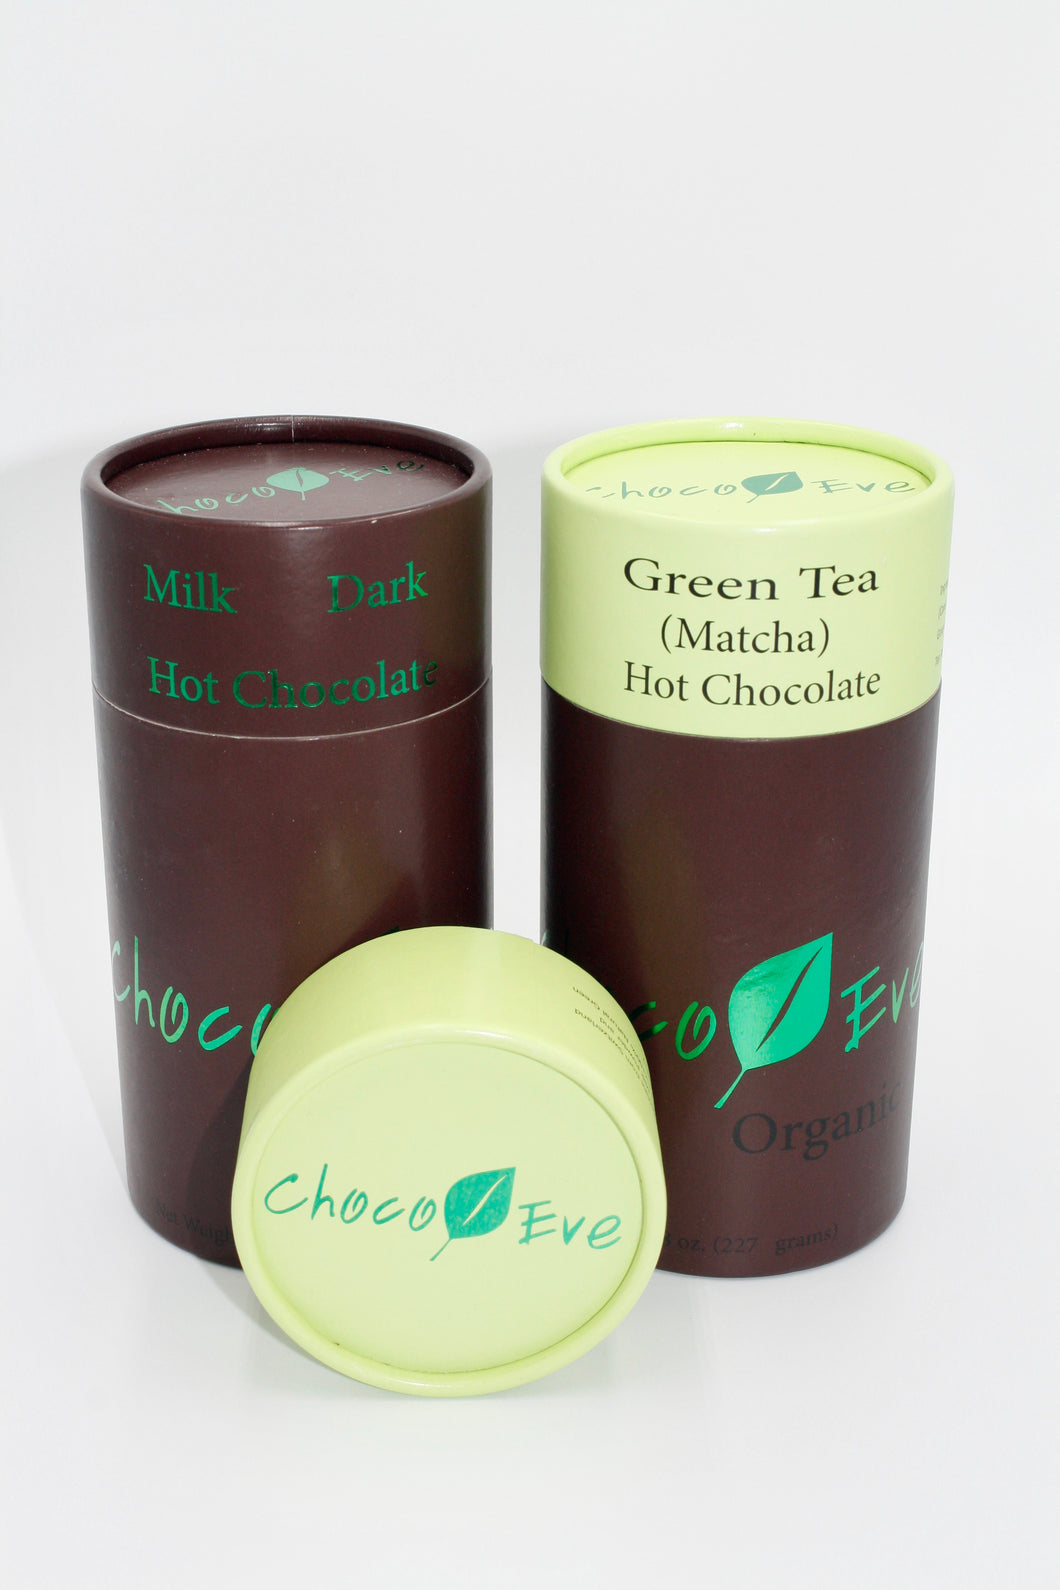 ChocoEve Organic Hot Chocolate - Green Tea Flavored